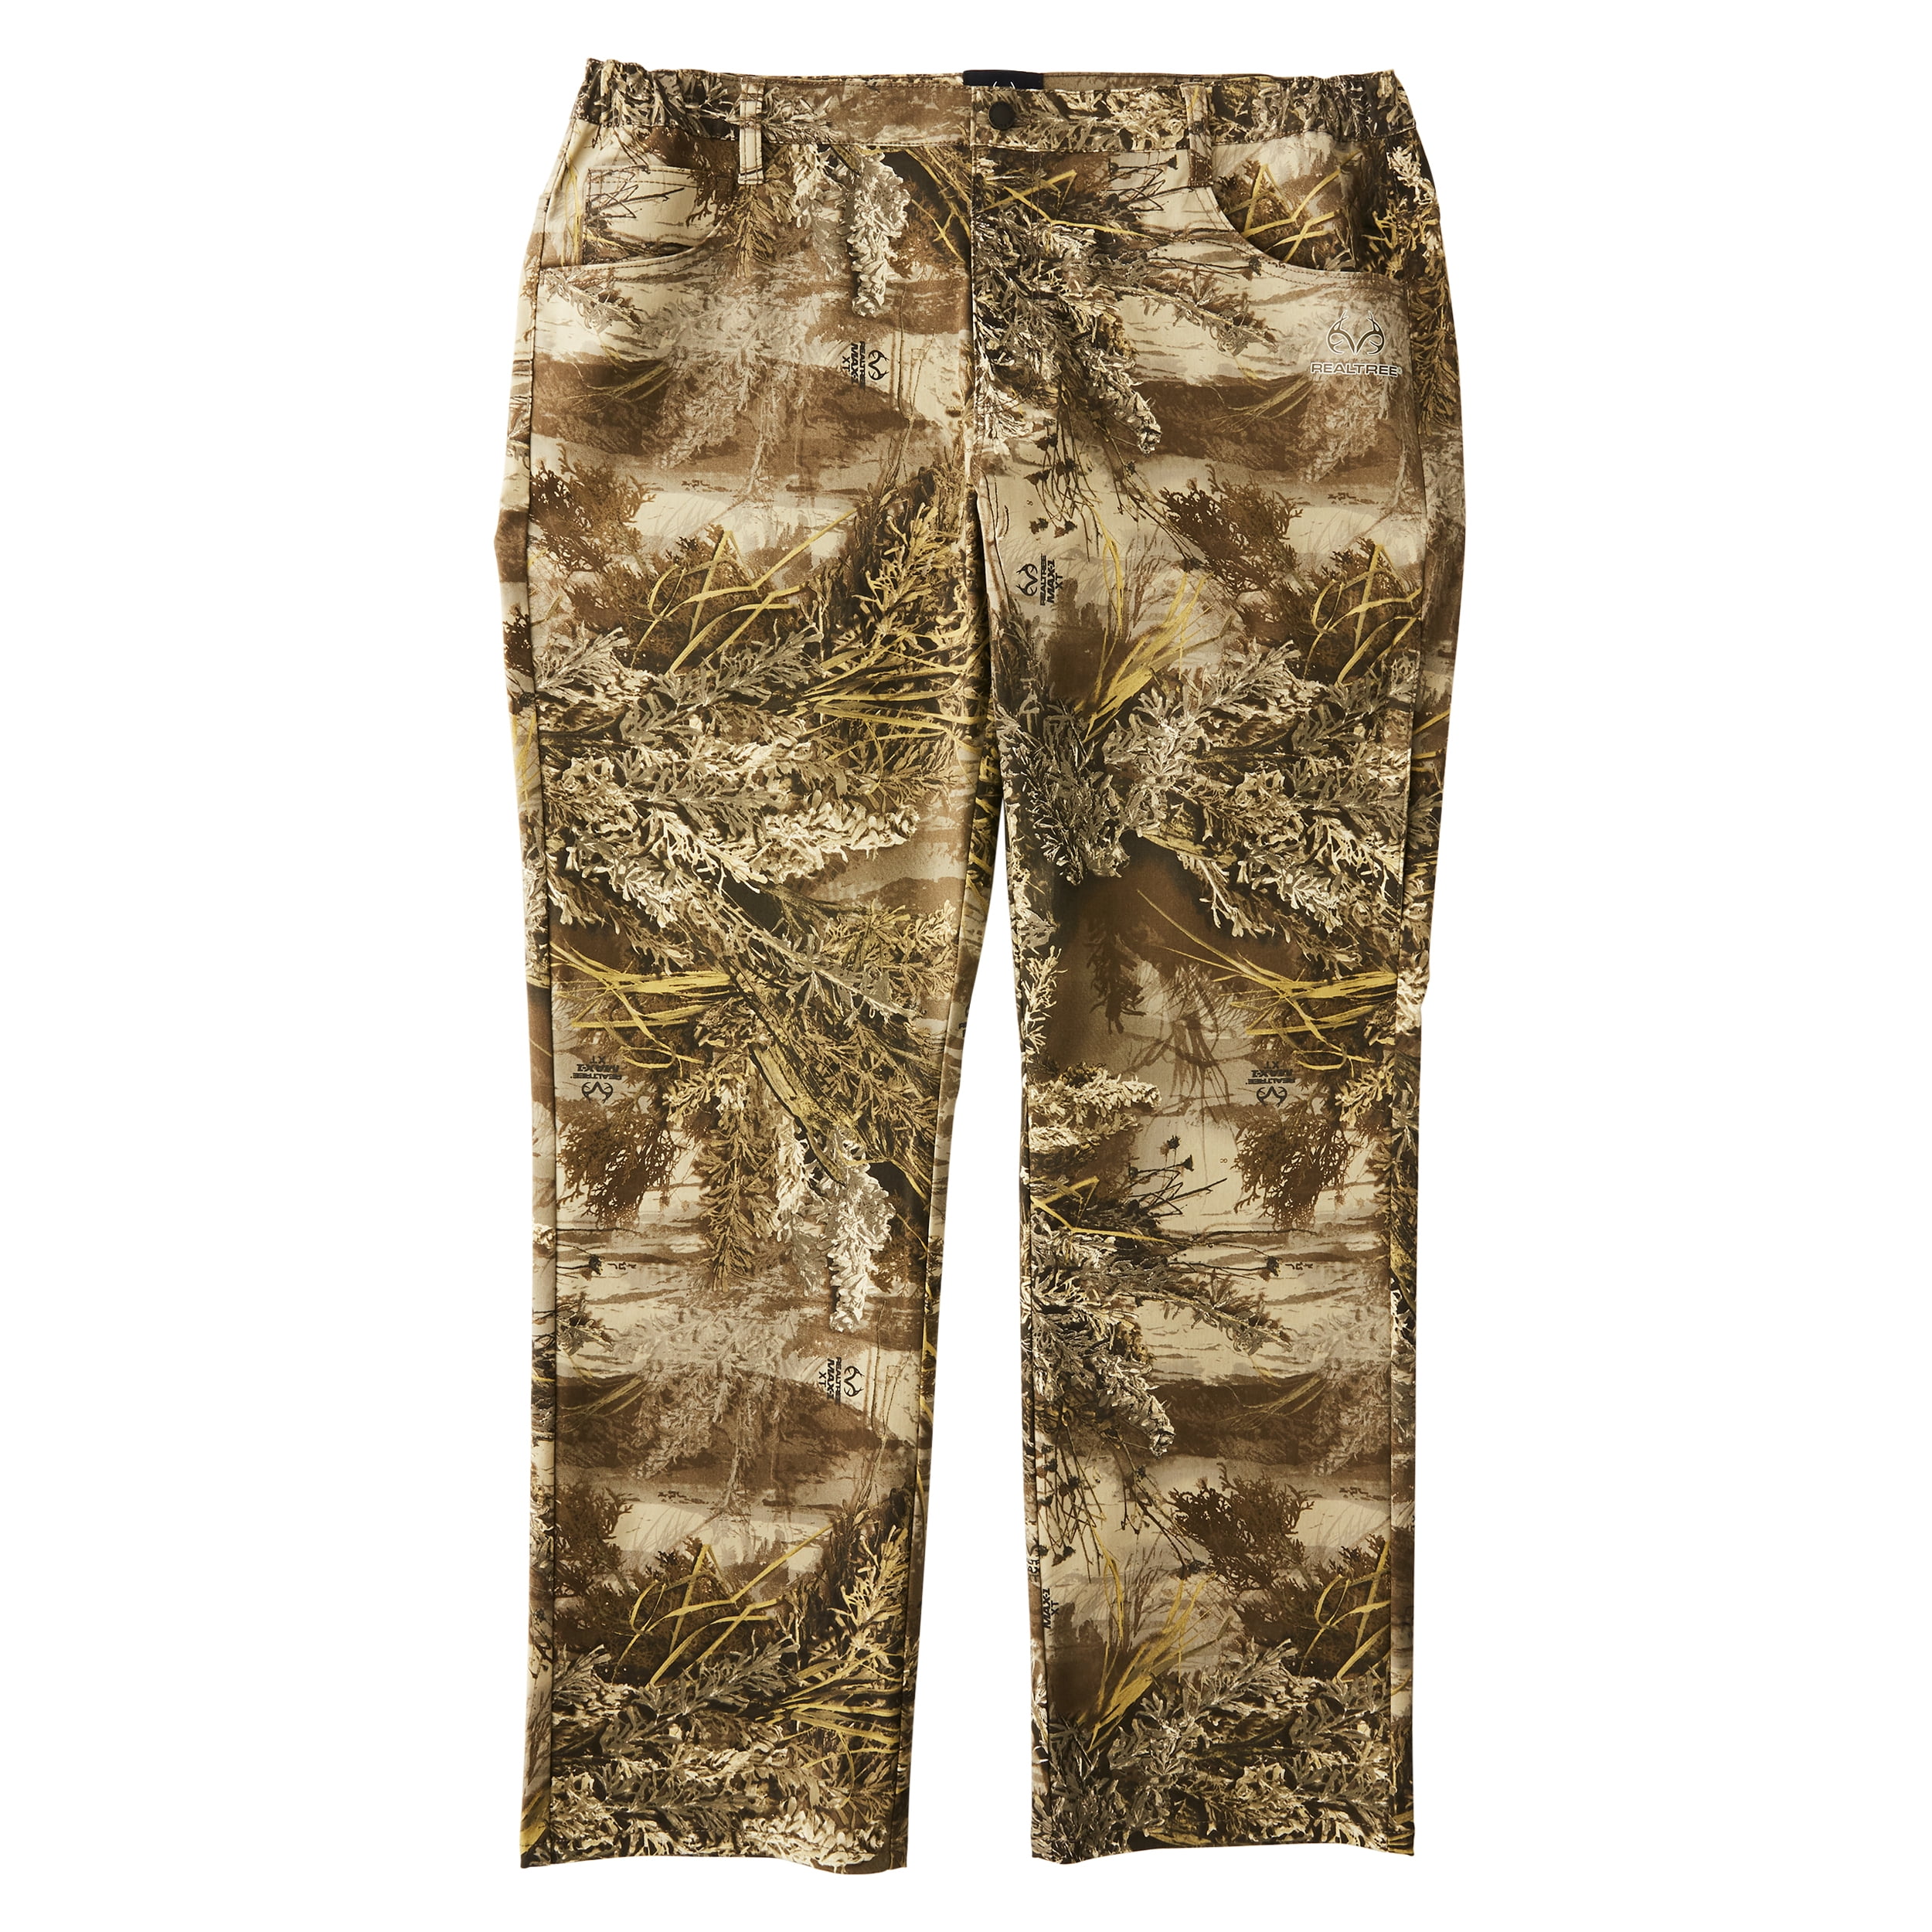 All Sizes Realtree Edge Camo Men's 5-Pocket Flex Comfort Jean Pants 